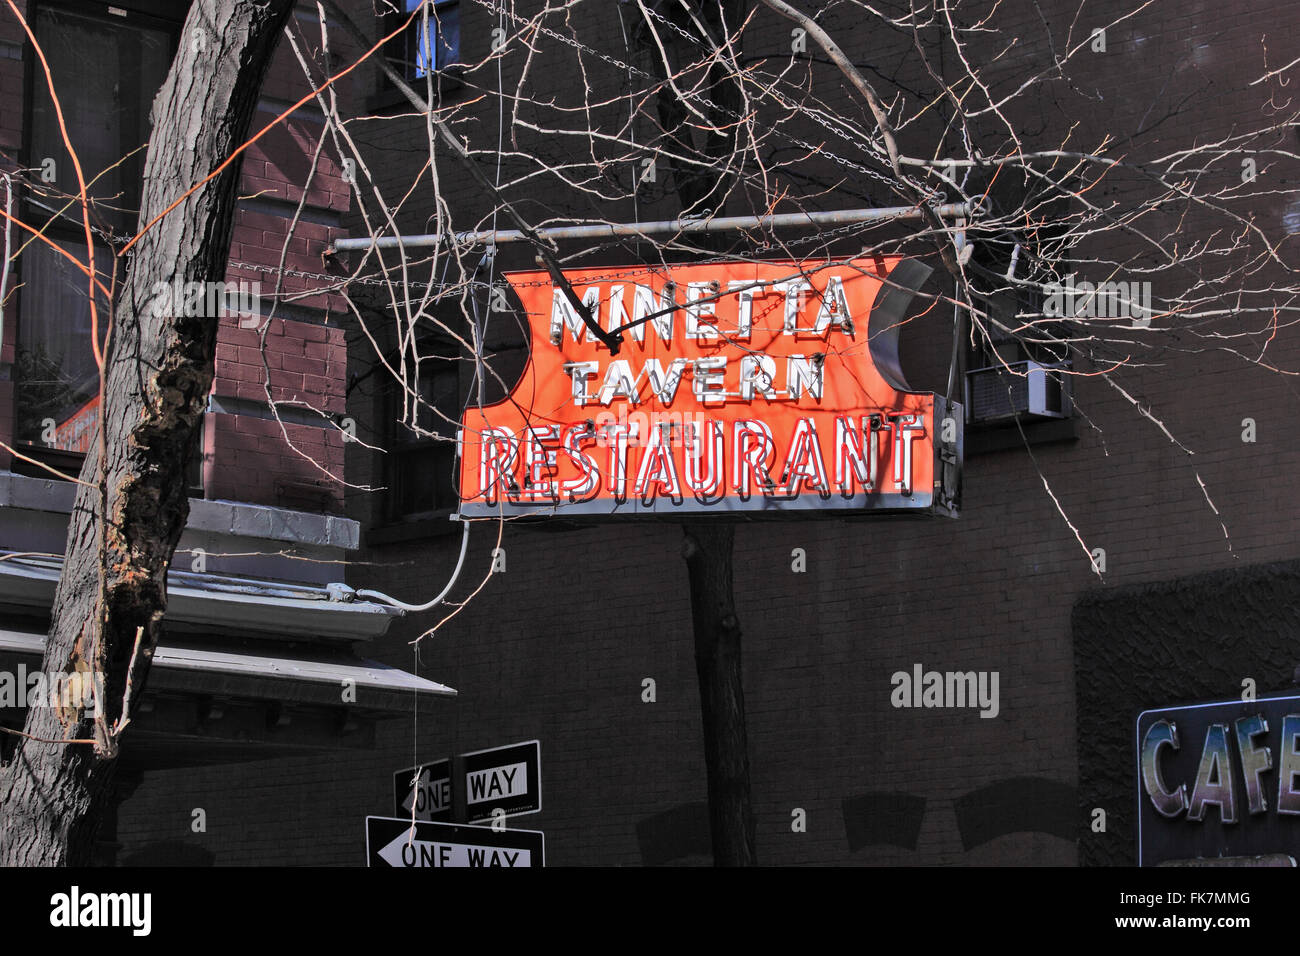 Minetta Tavern and Restaurant Greenwich Village New York City Stock Photo